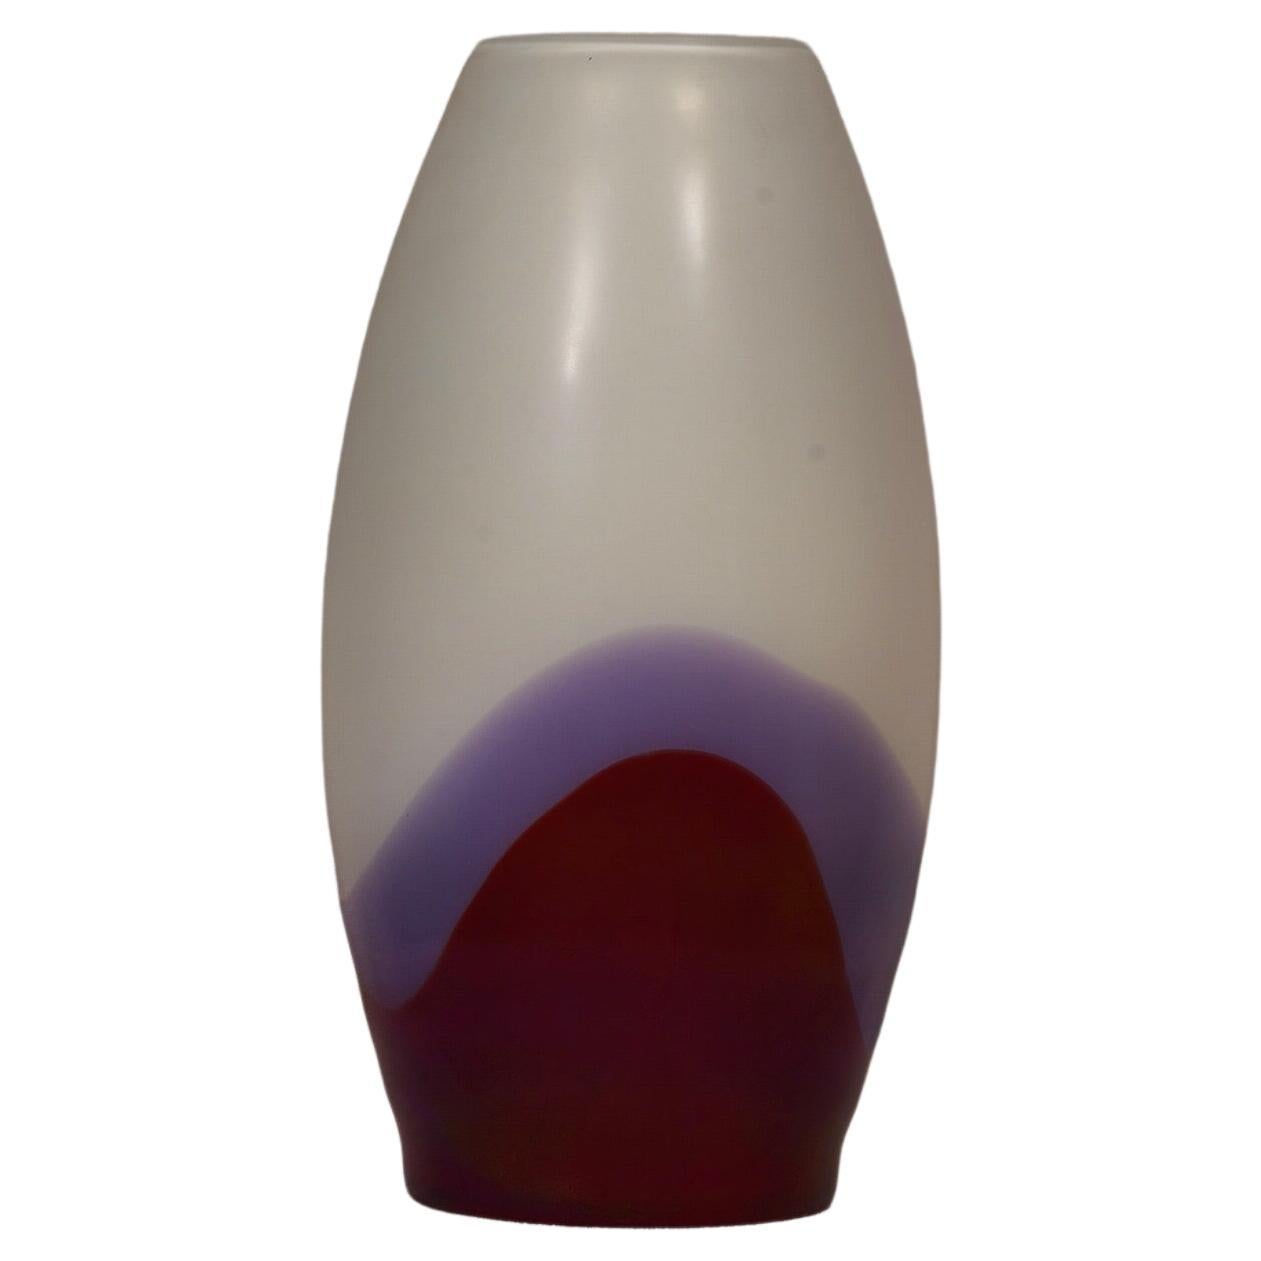 Vivarini La Formia Murano Art Glass Violet Red and White Vase, 1980 For Sale